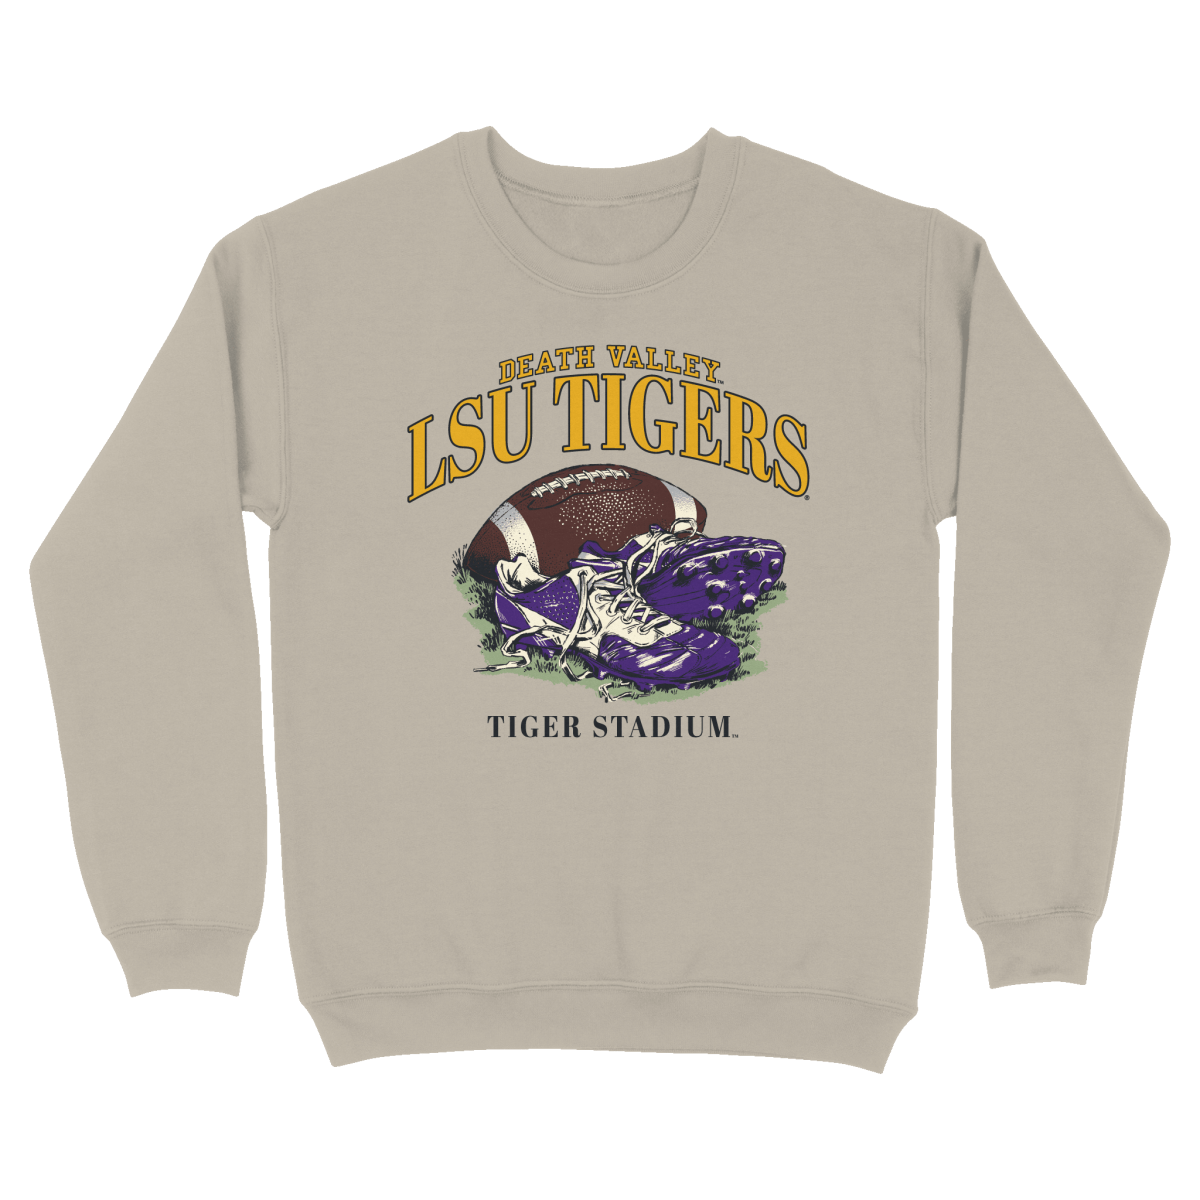 LSU Tigers Louisiana state Baton Rouge shirt, hoodie, sweater and